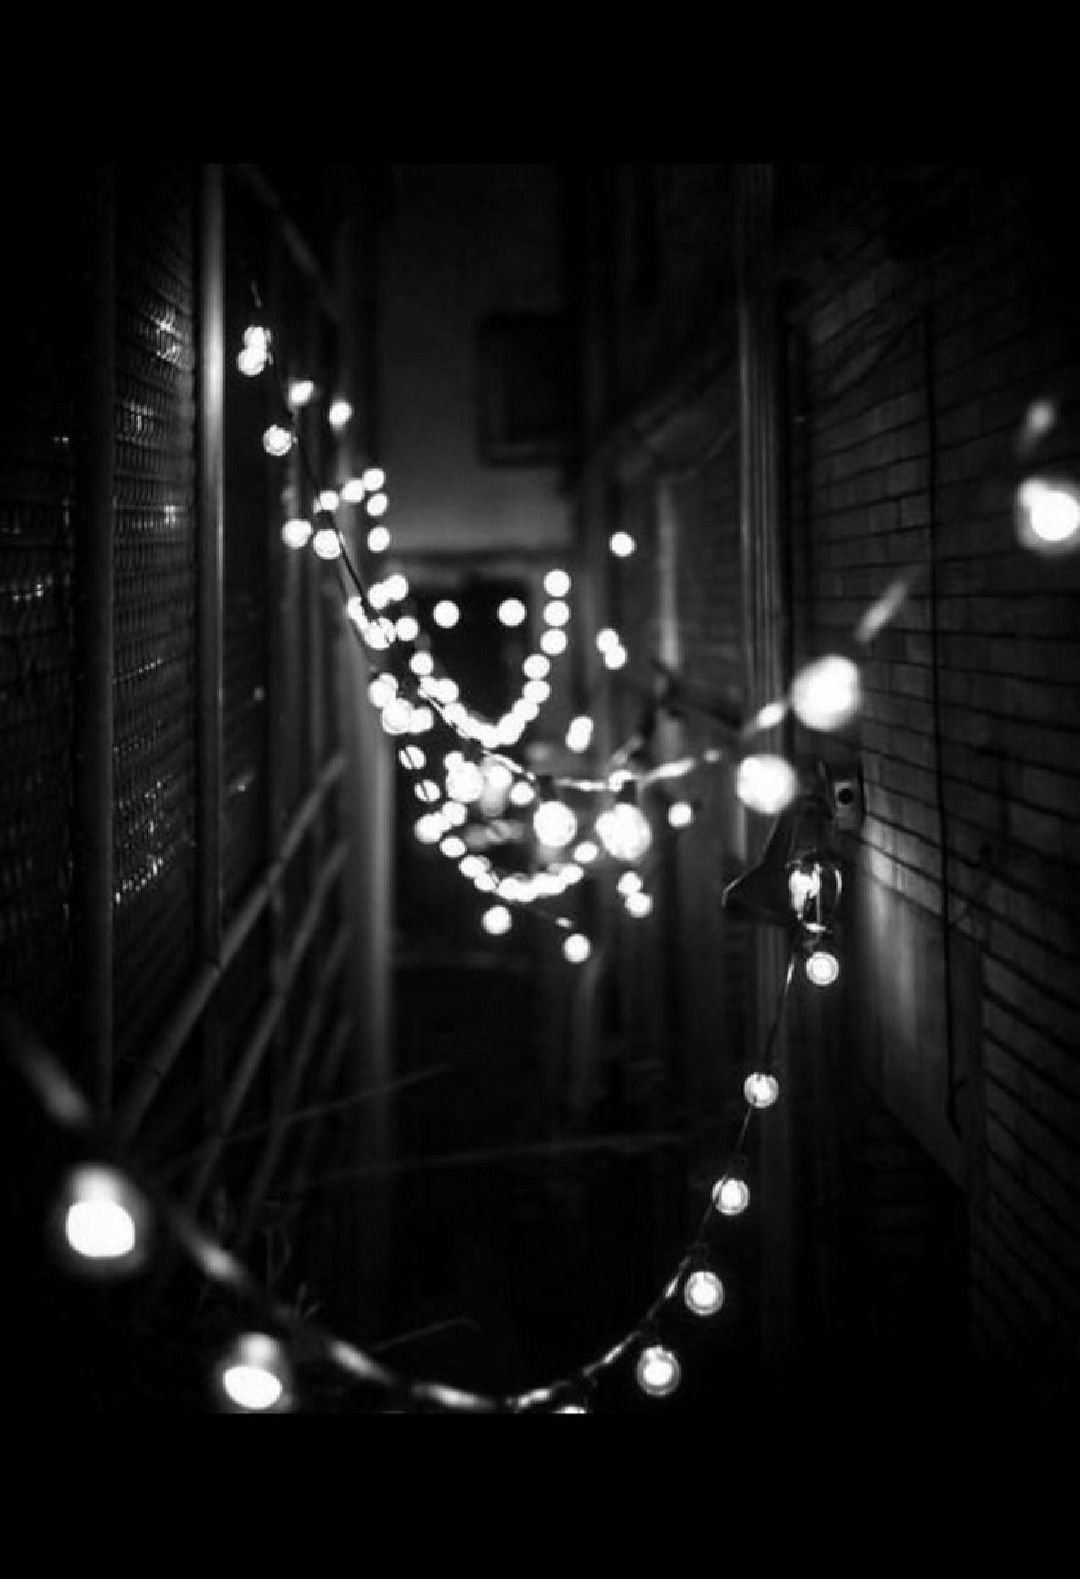 String lights in a dark alley - Black, fairy lights, Christmas lights